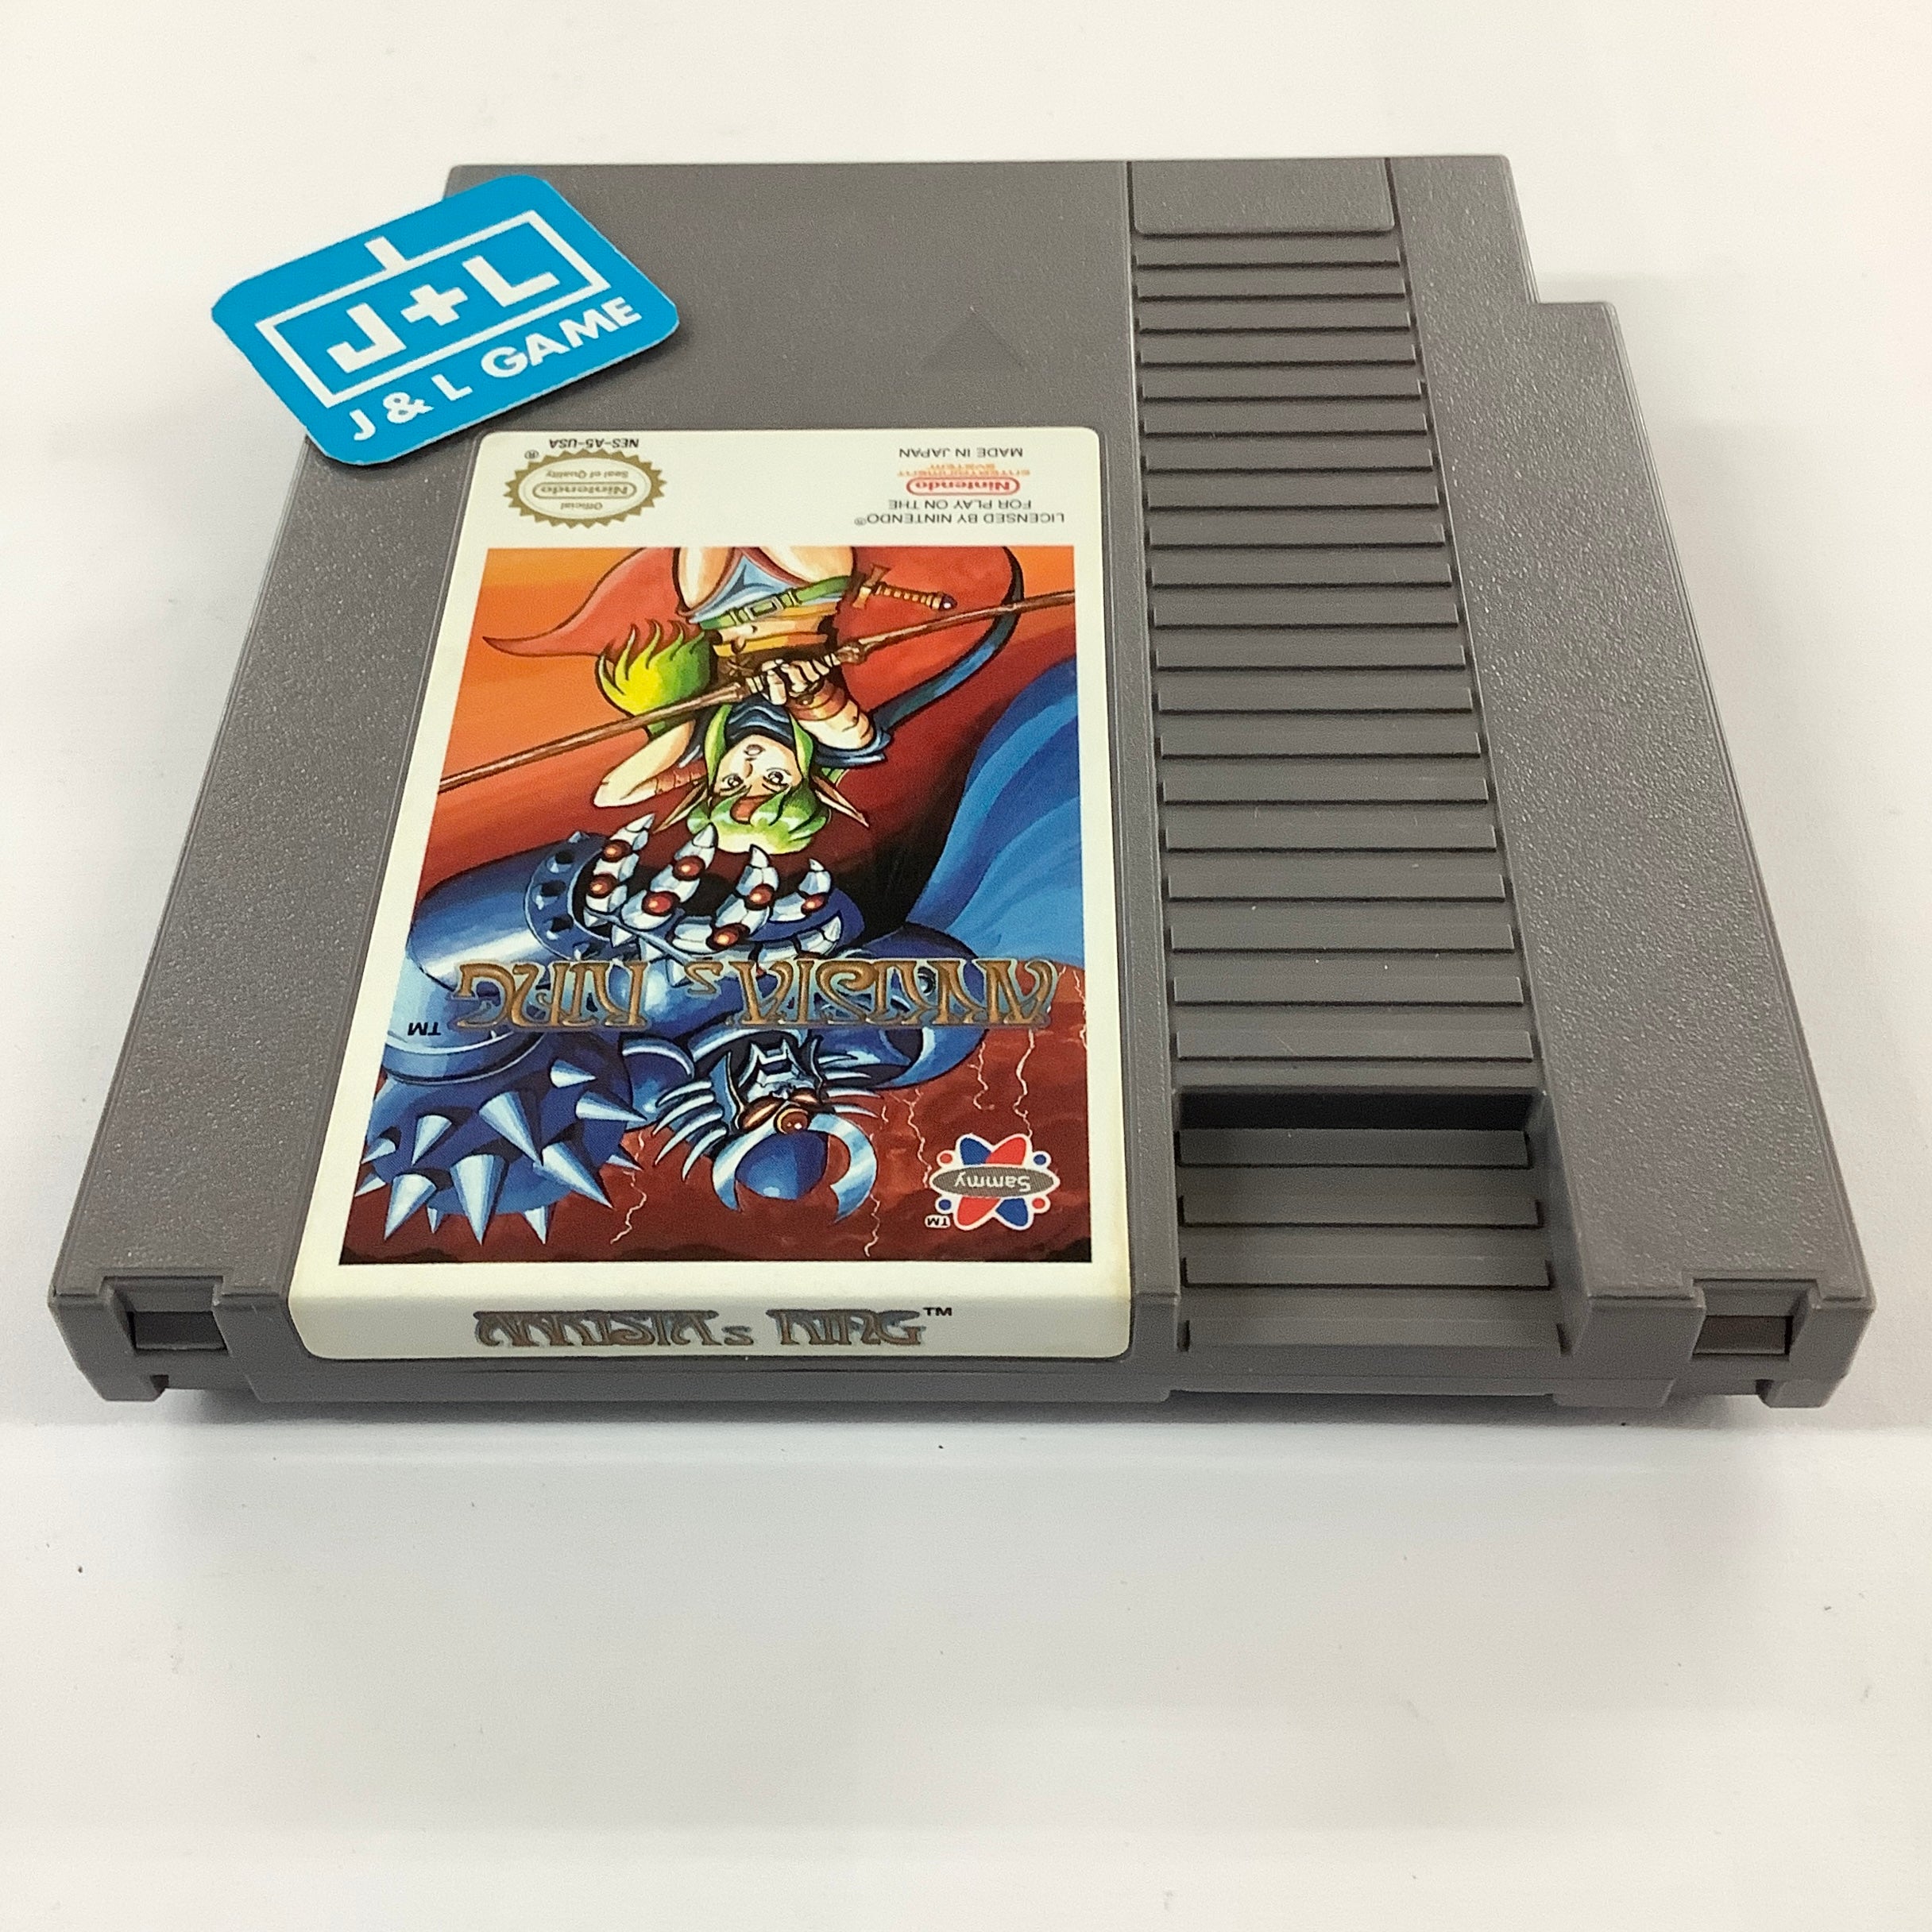 Arkista's Ring - (NES) Nintendo Entertainment System [Pre-Owned] Video Games Sammy Studios   